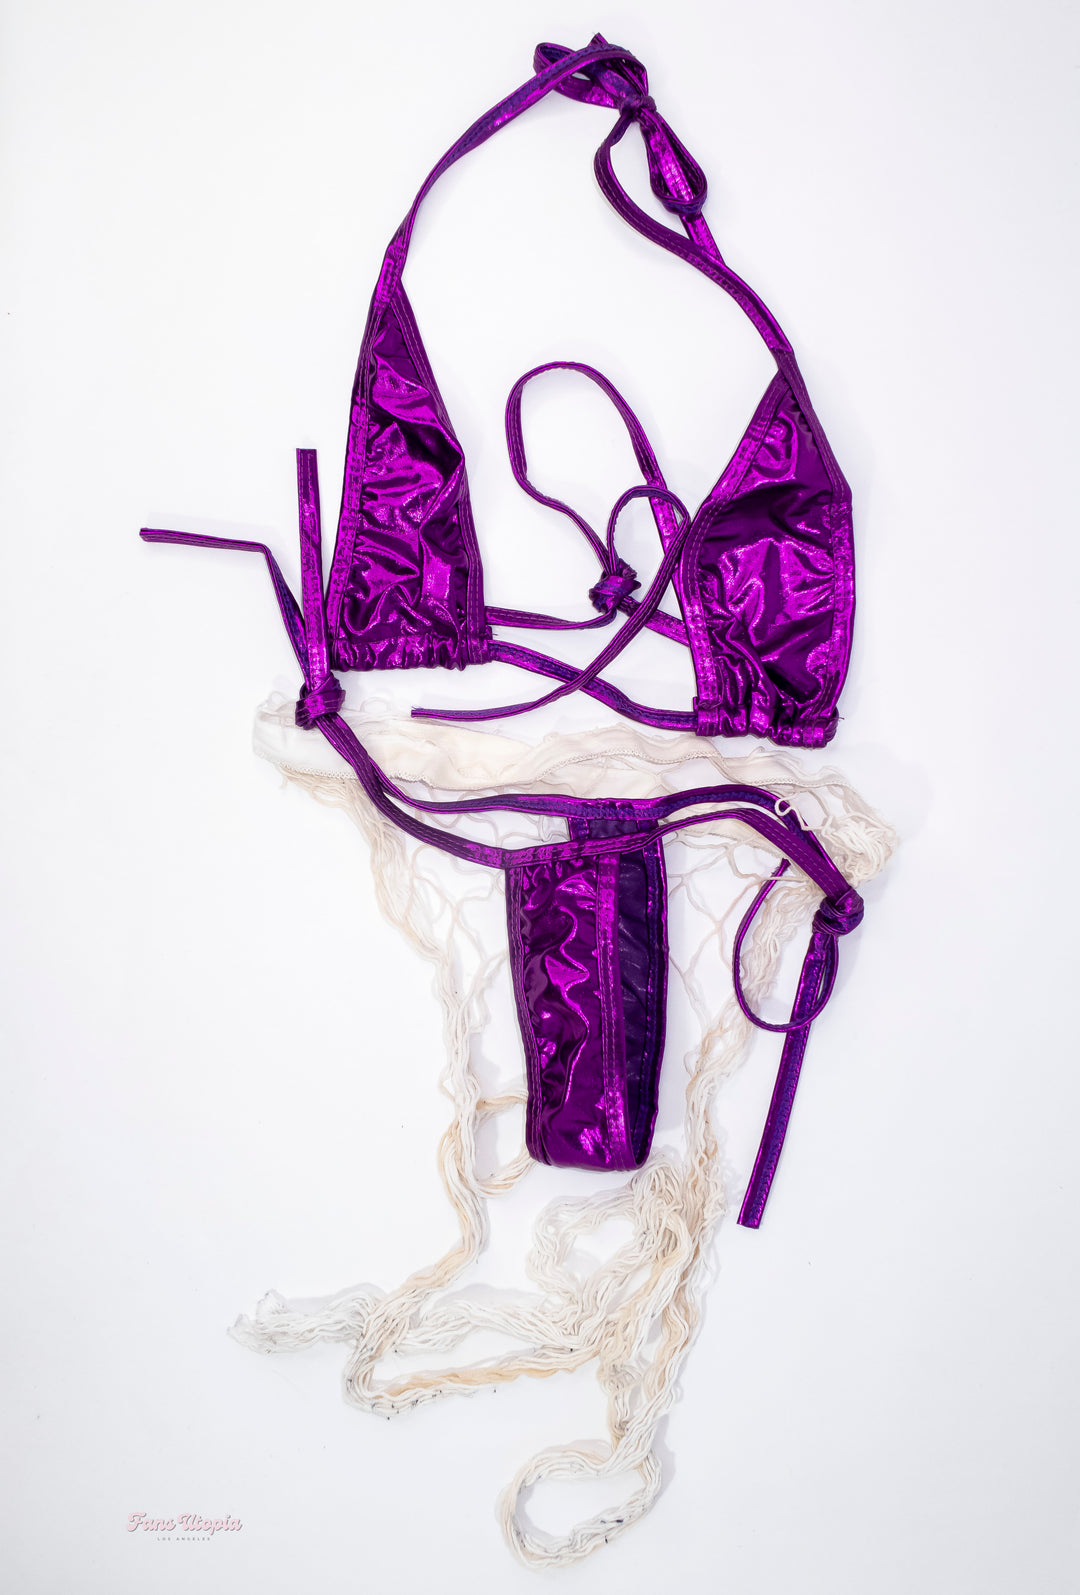 Payton Preslee Metallic Purple Bikini + Fishnets